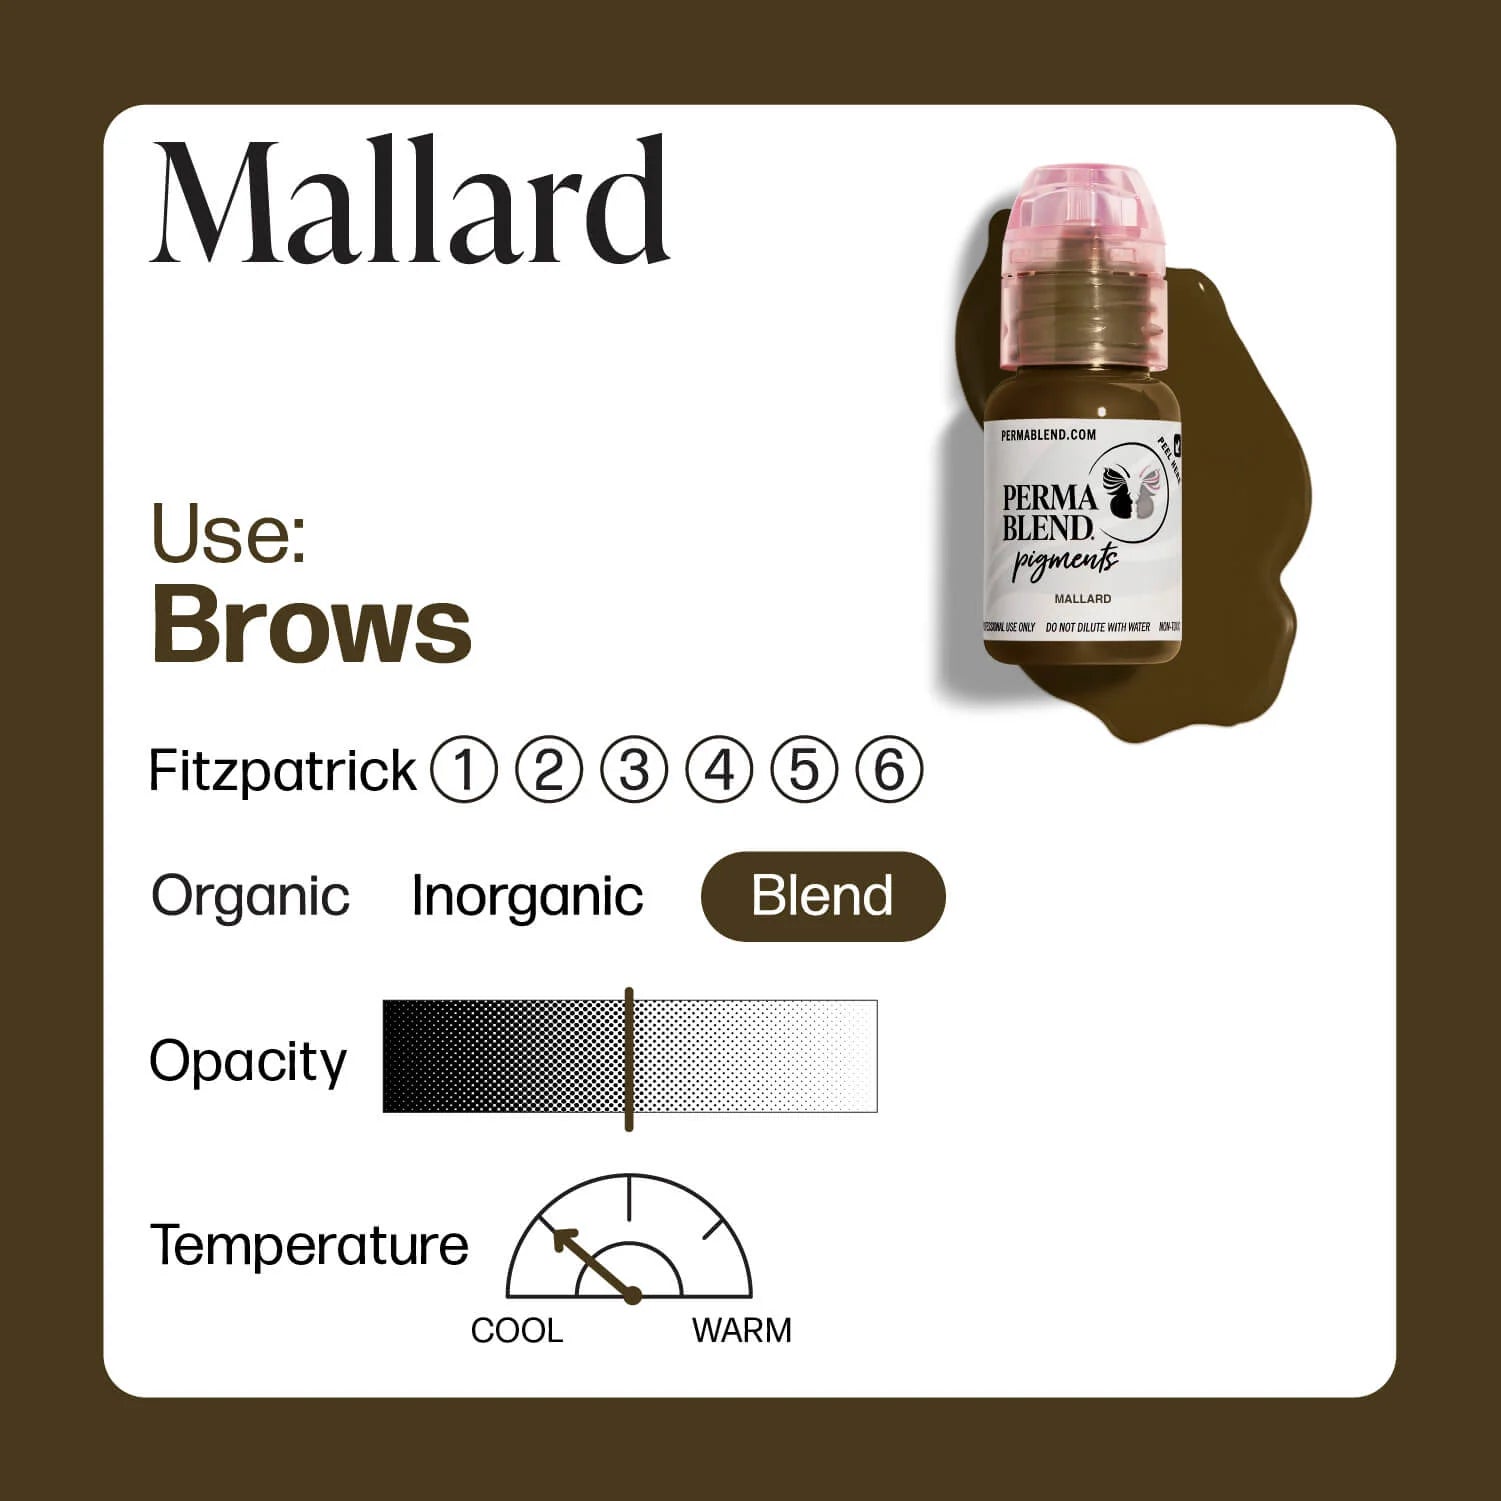 PERMA BLEND BROW PIGMENT - MALLARD INFORMATION